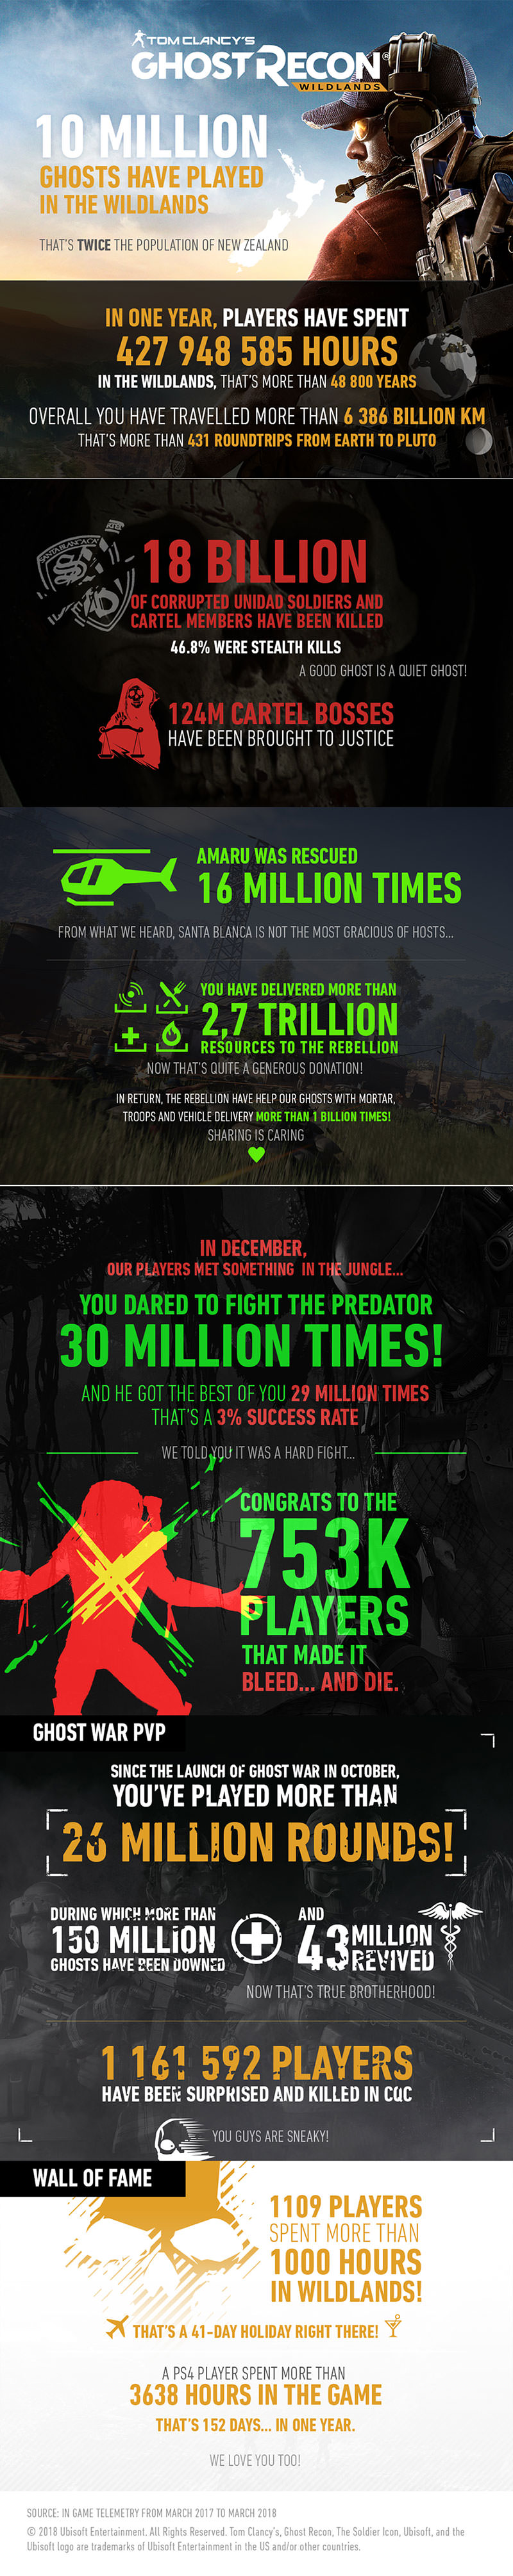 Ghost Recon Wildlands infographic 